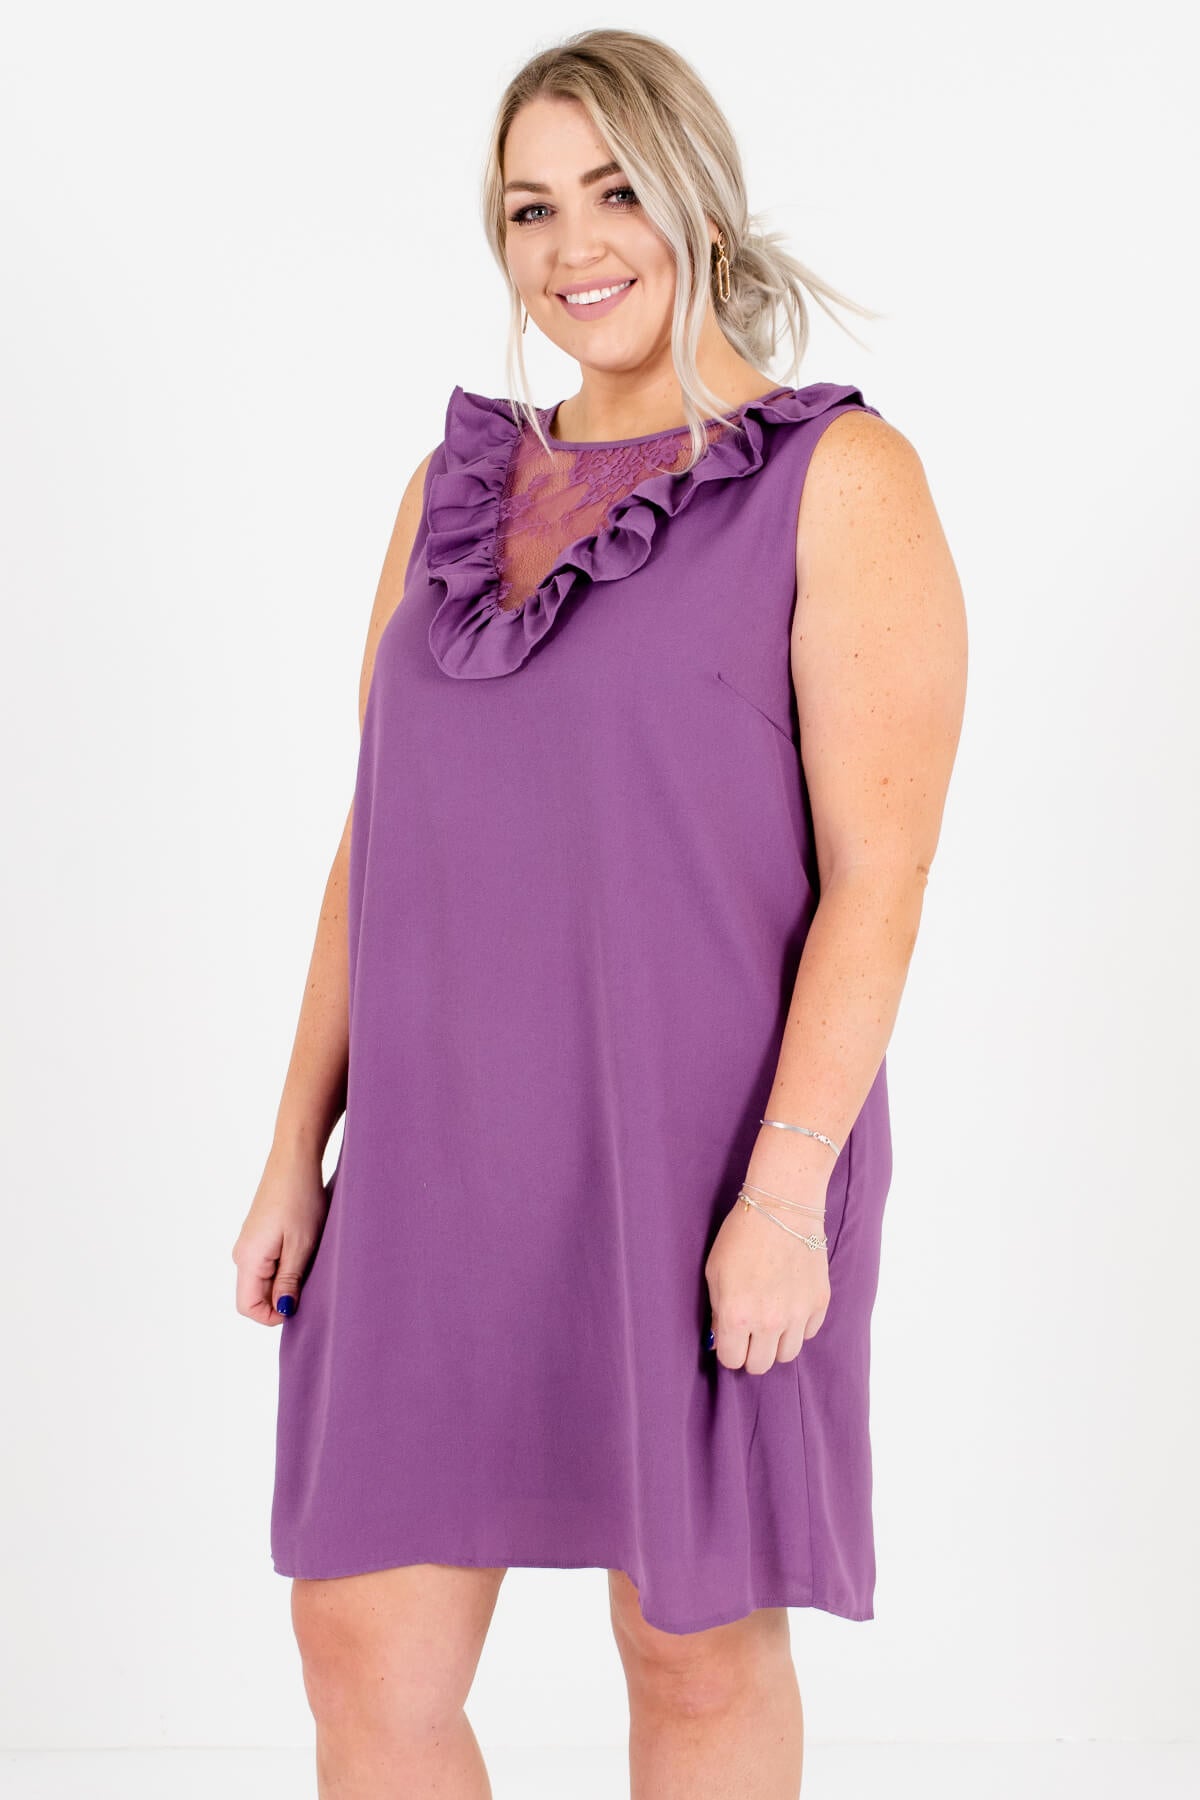 Women's Purple Sleeveless Style Plus Size Boutique Mini Dress